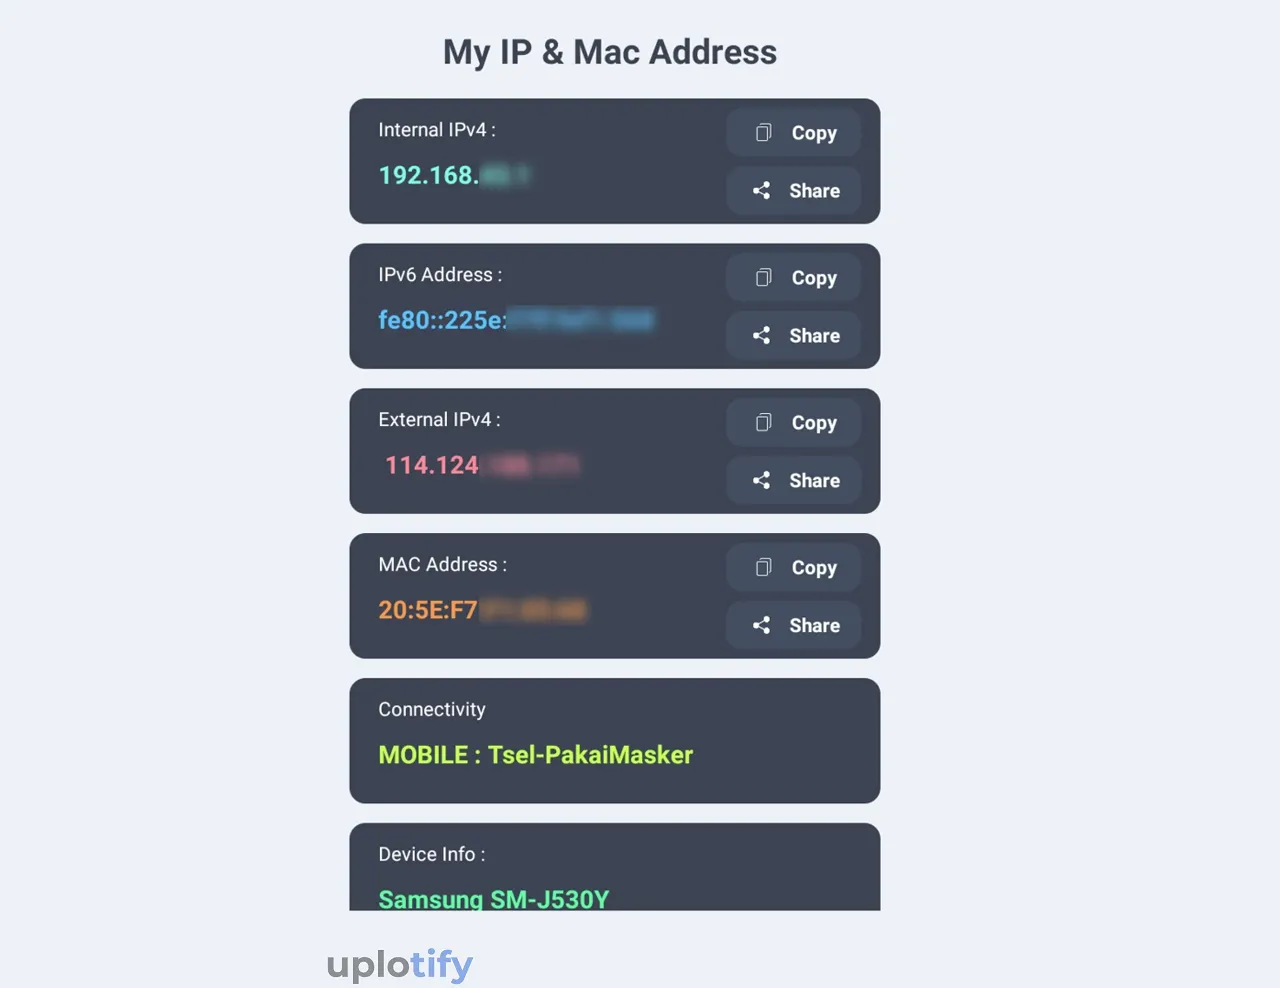 Lihat MAC Address di My IP and MAC Address